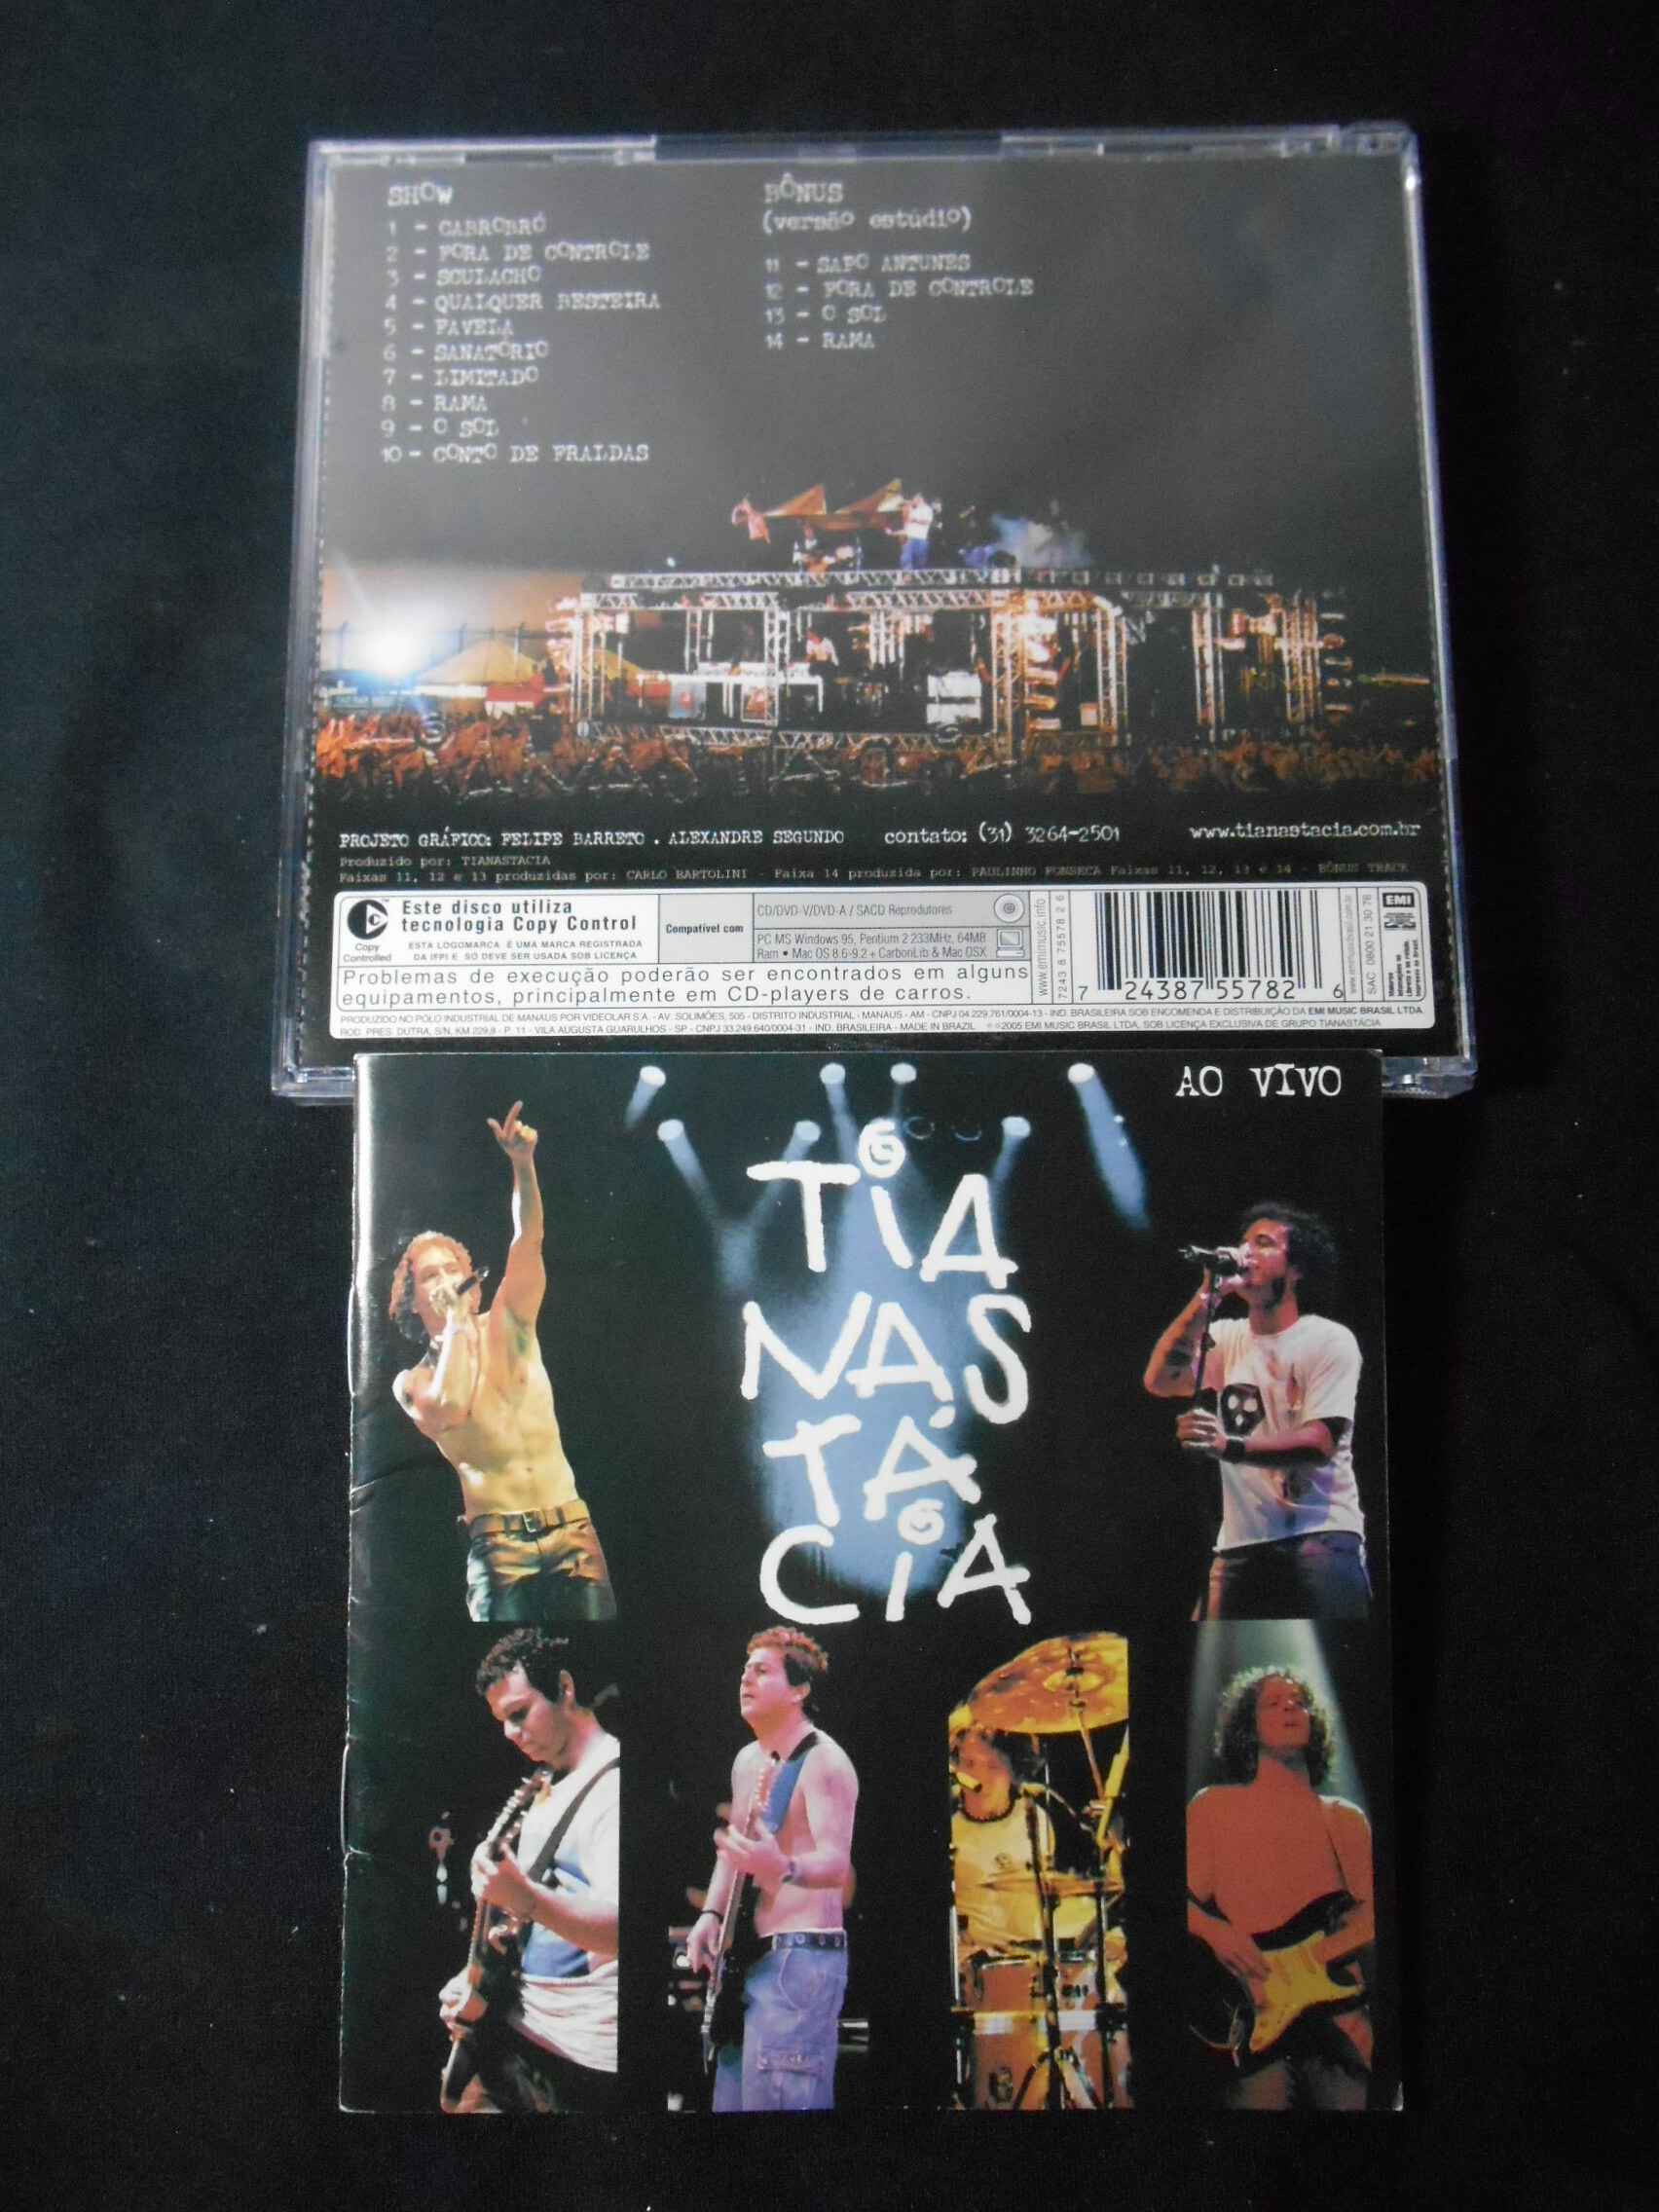 CD - Tianastacia - Ao Vivo